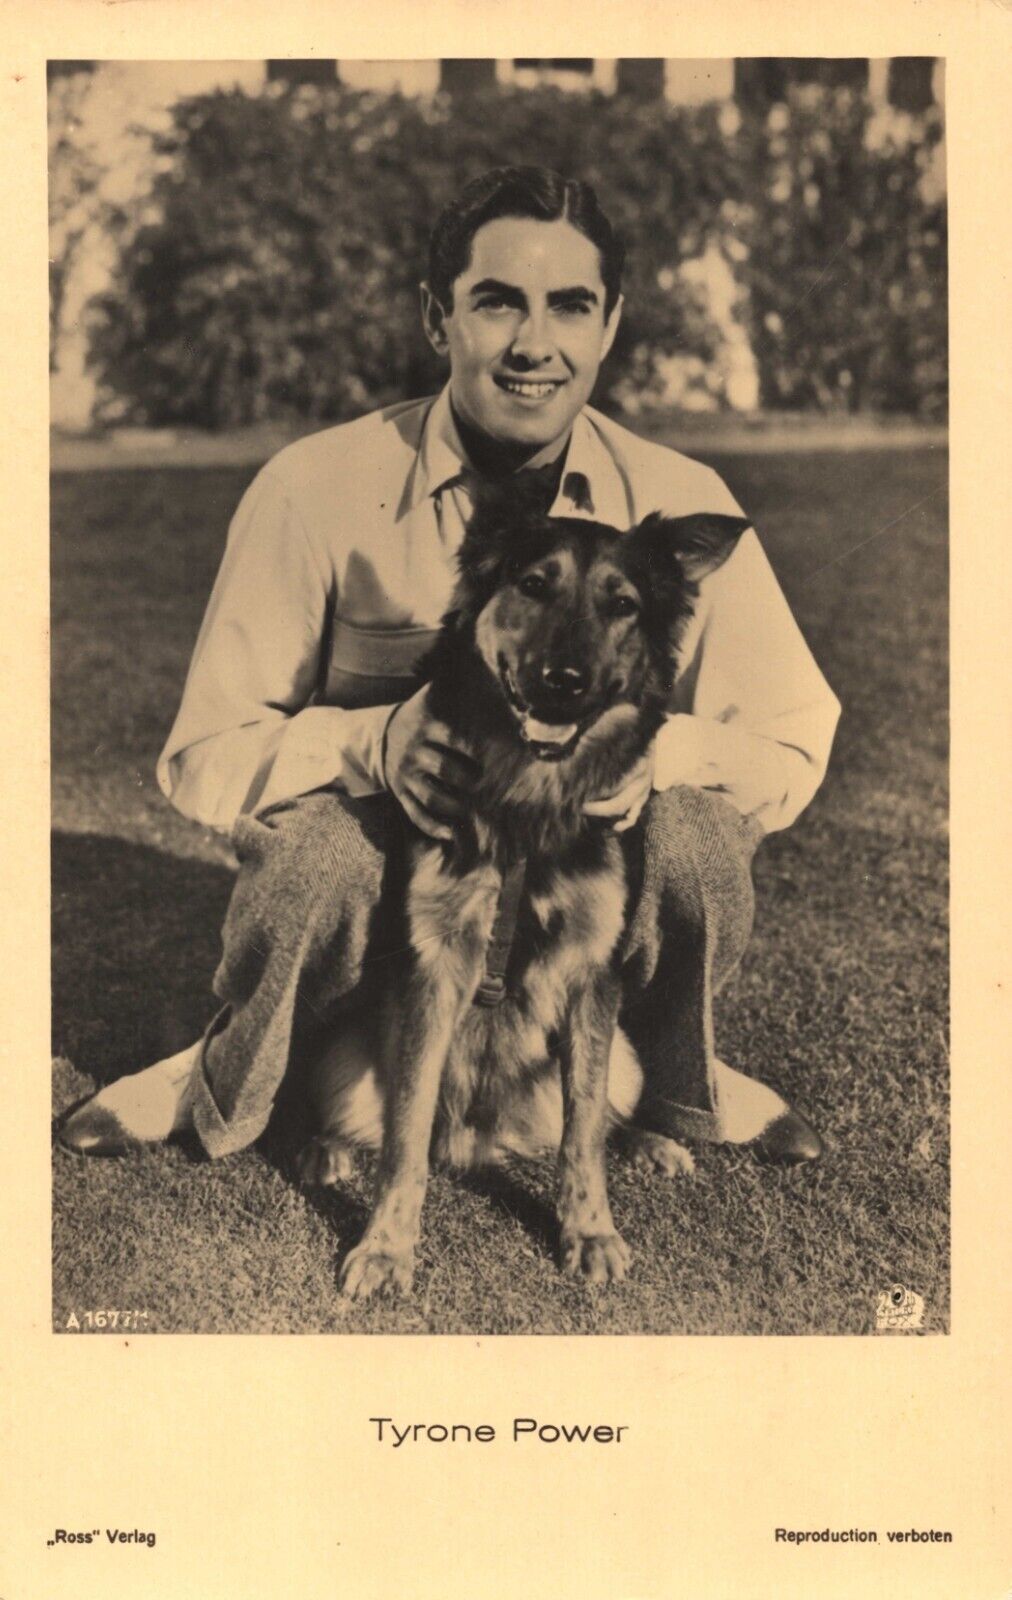 Tyrone Power with German Shepherd Dog Vintage 1928 Photo Postcard by Ross Verlag